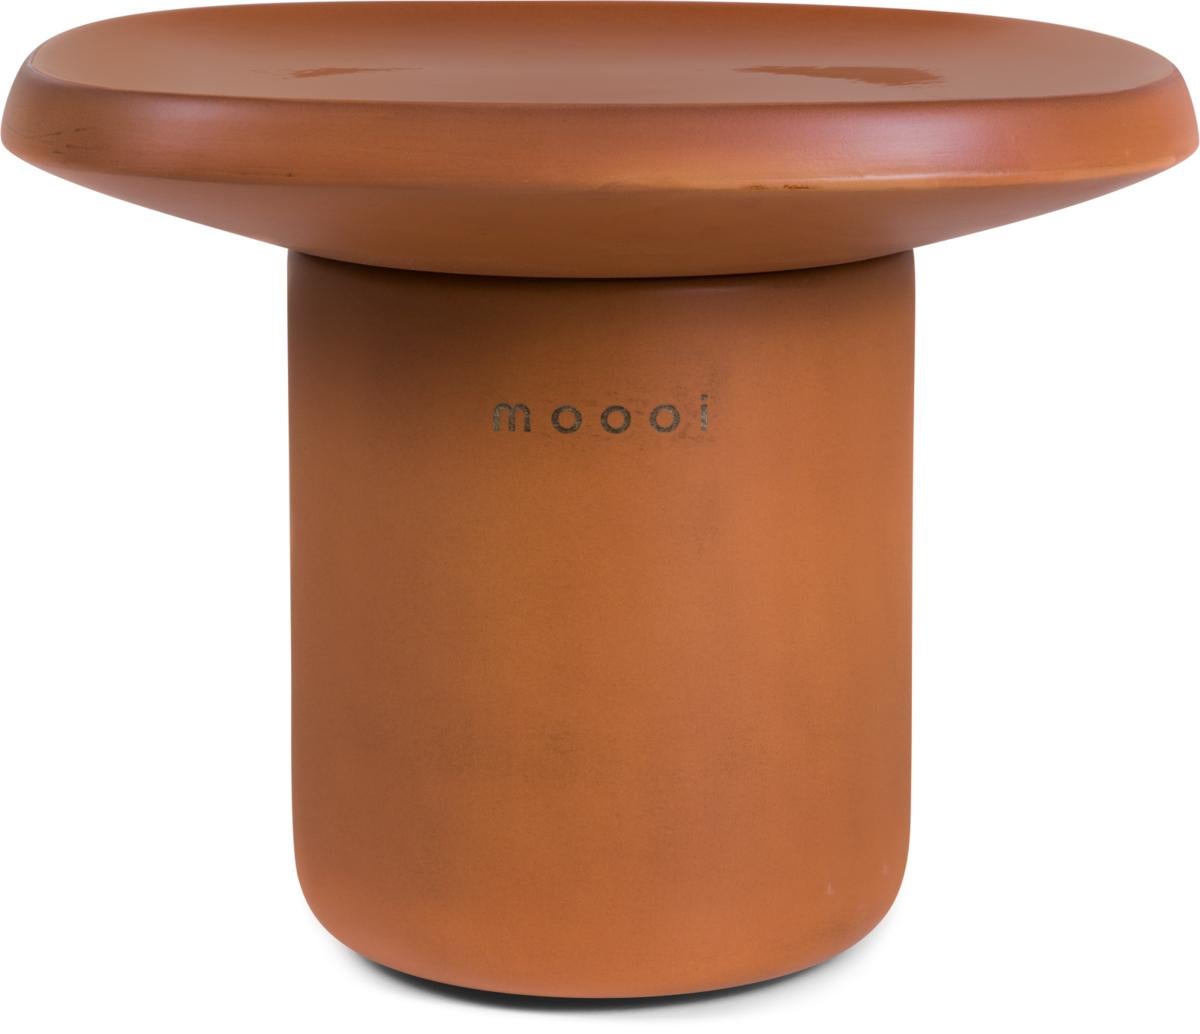 Moooi Obon Rectangular Low Ceramic Table in Grey Finish by Simone Bonanni For Sale 2